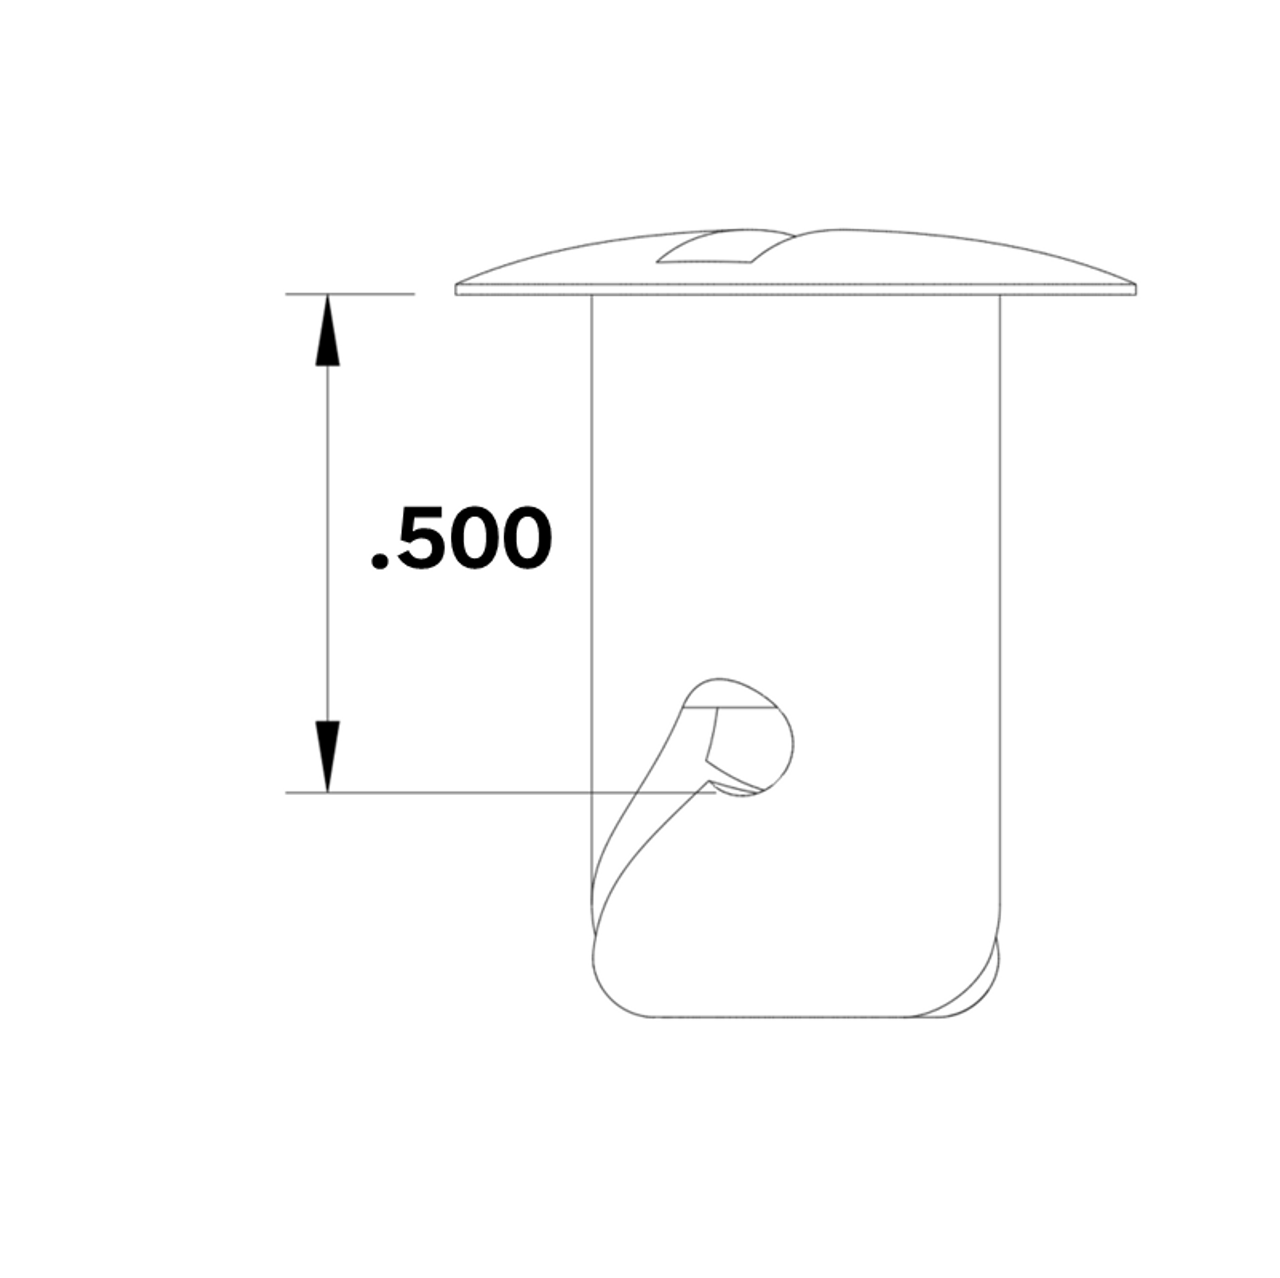 .500 long dome dzus fastener length dimension